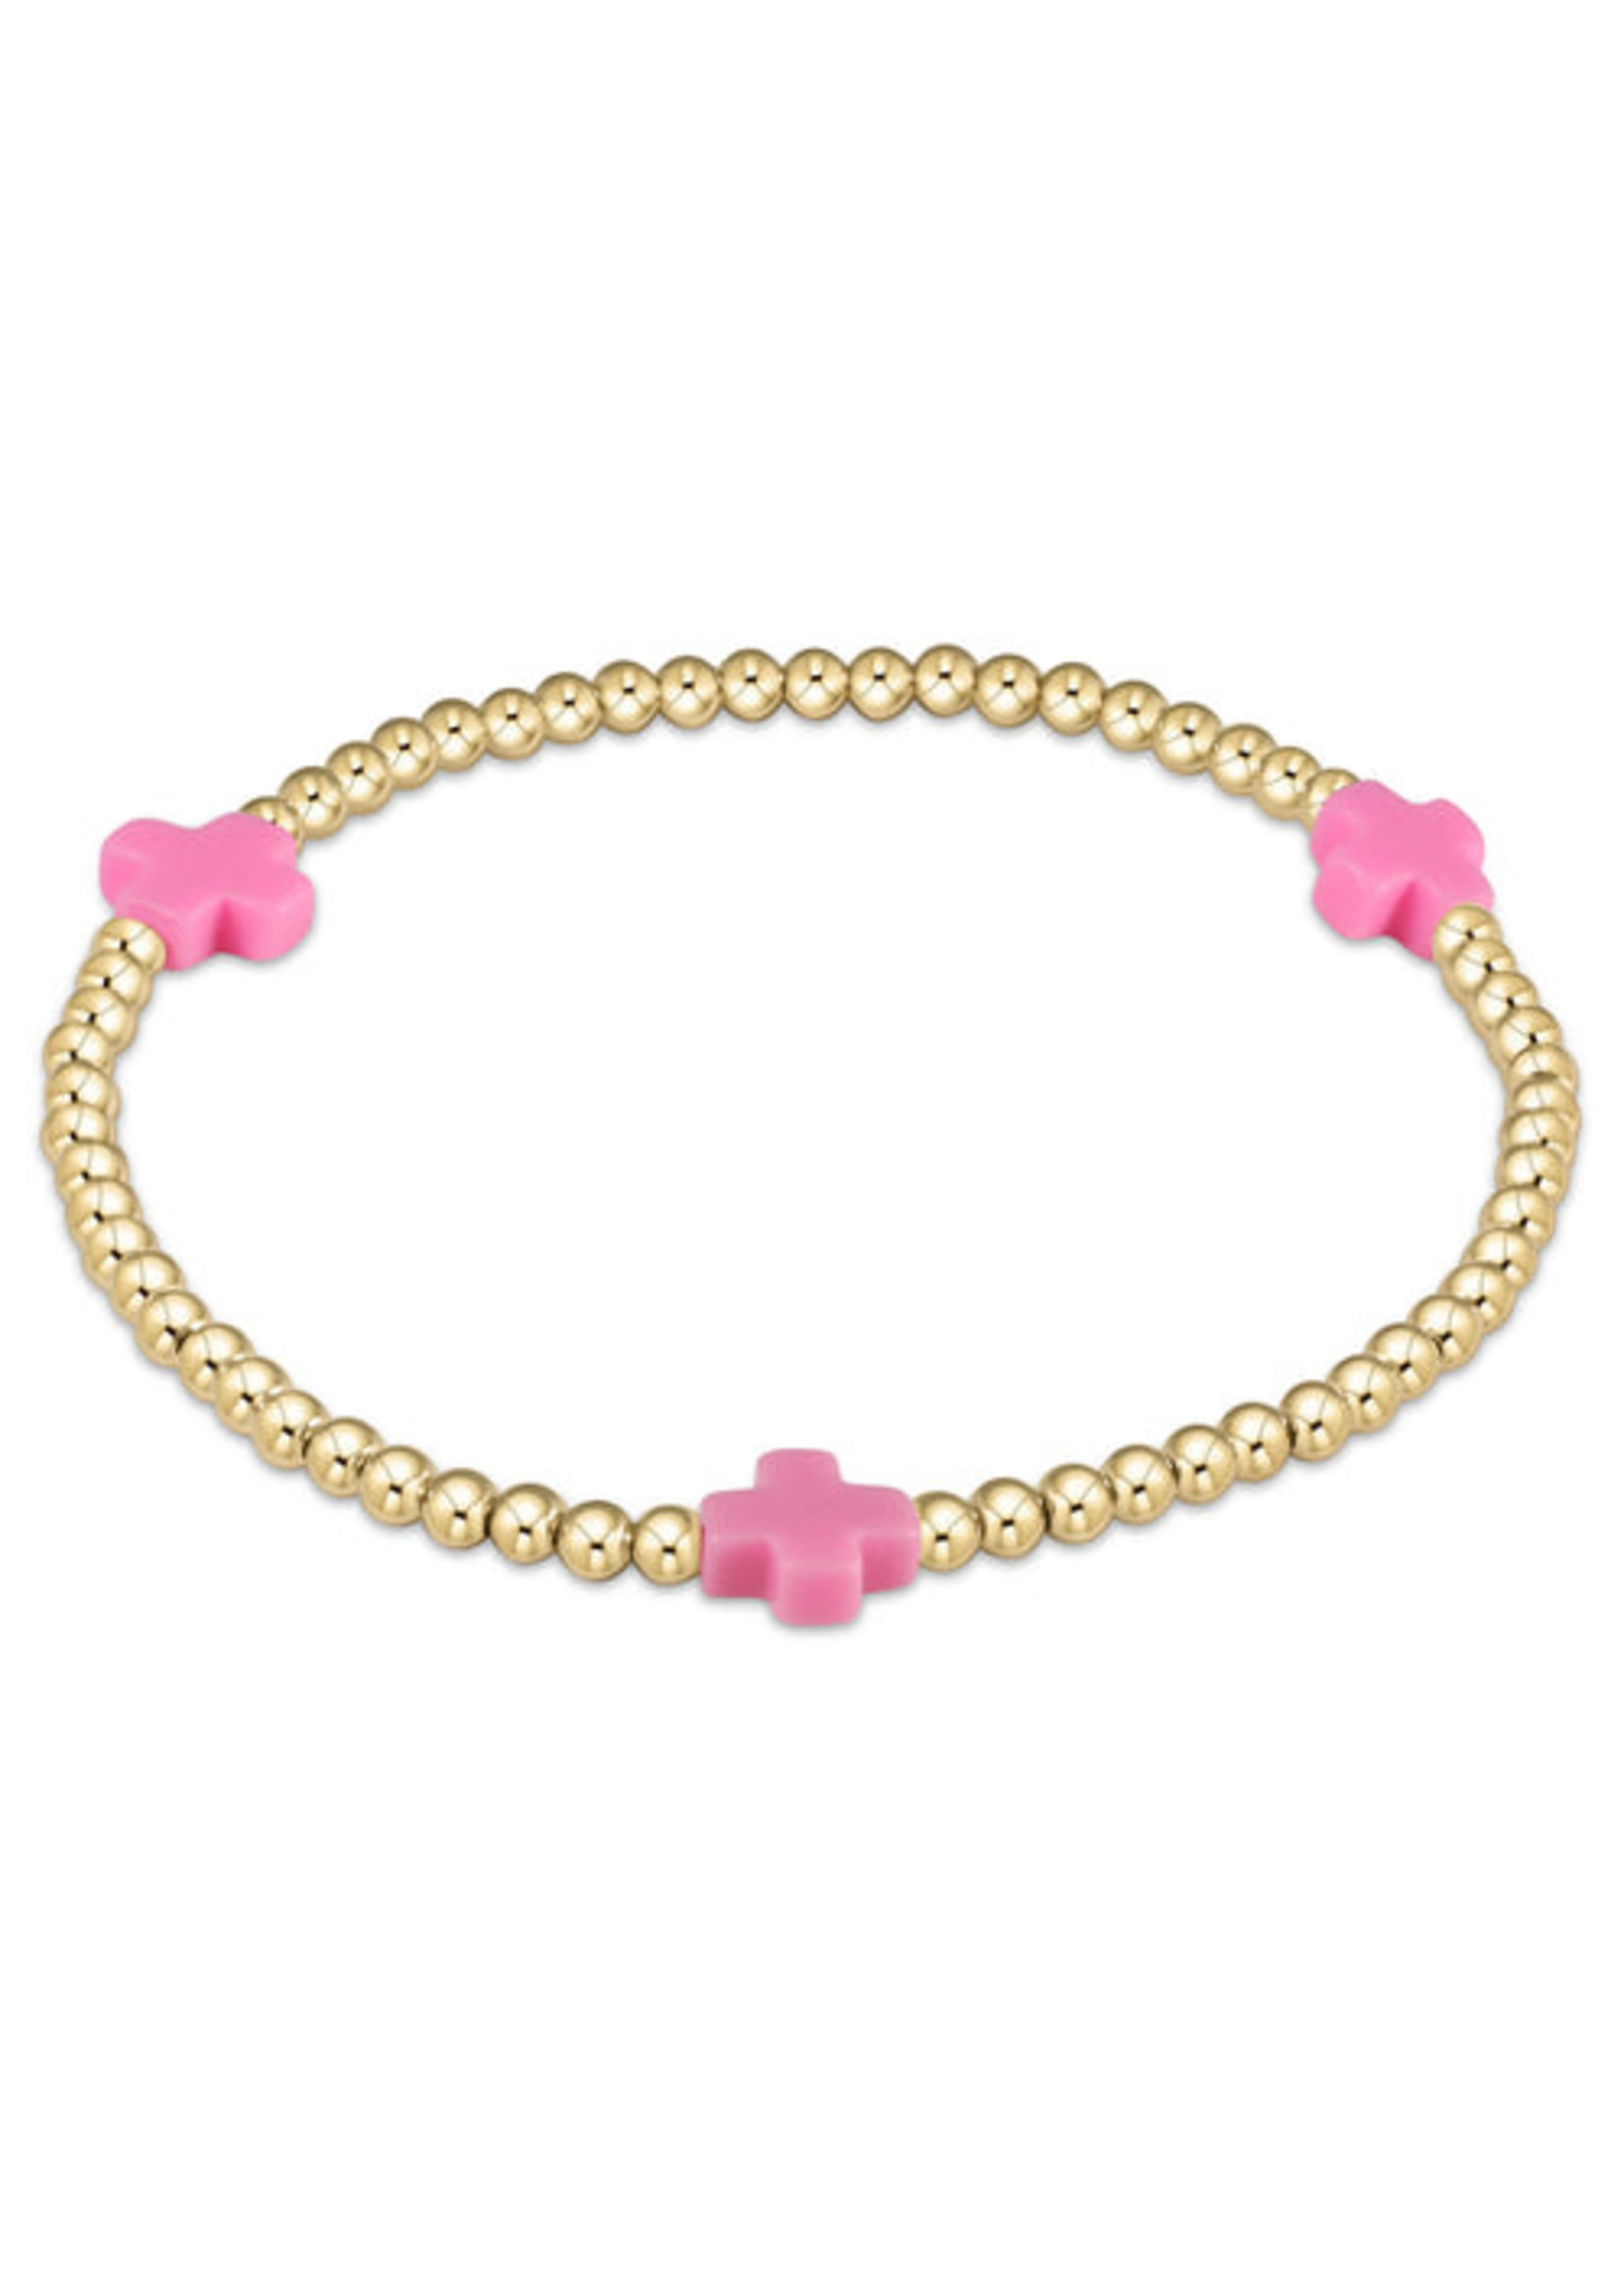 enewton Signature Cross Gold Pattern 3mm Bead Bracelet Bright Pink